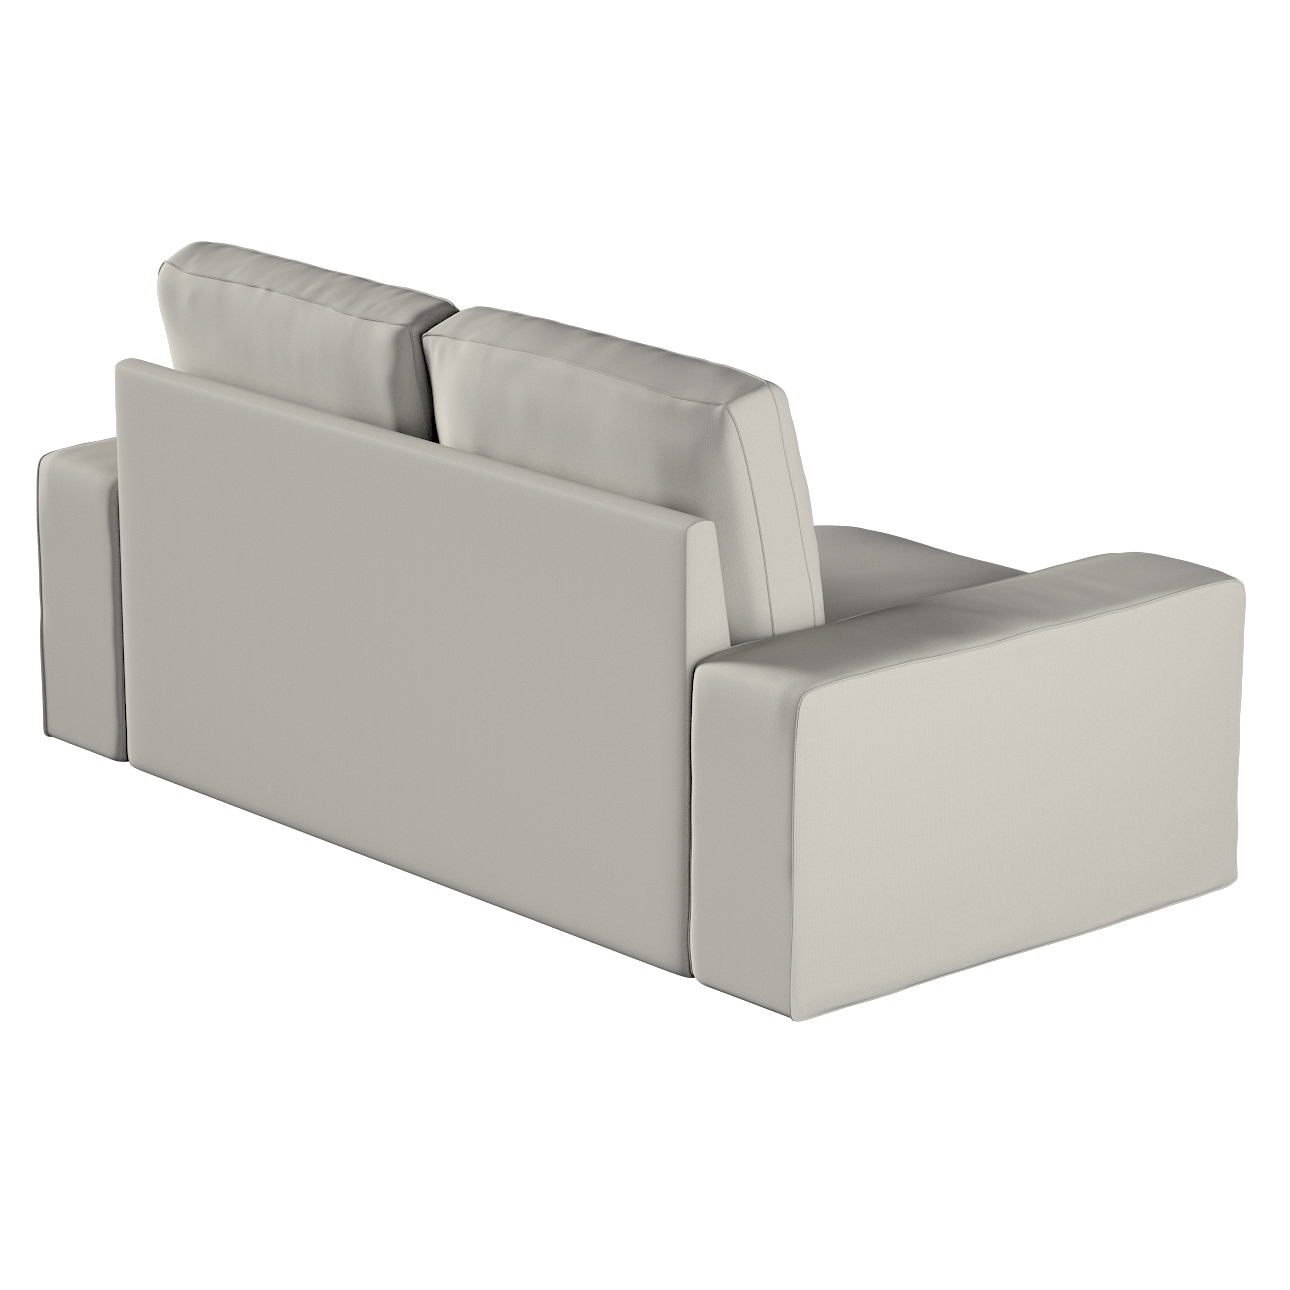 Bezug für Kivik 2-Sitzer Sofa, grau, Bezug für Sofa Kivik 2-Sitzer, Living günstig online kaufen